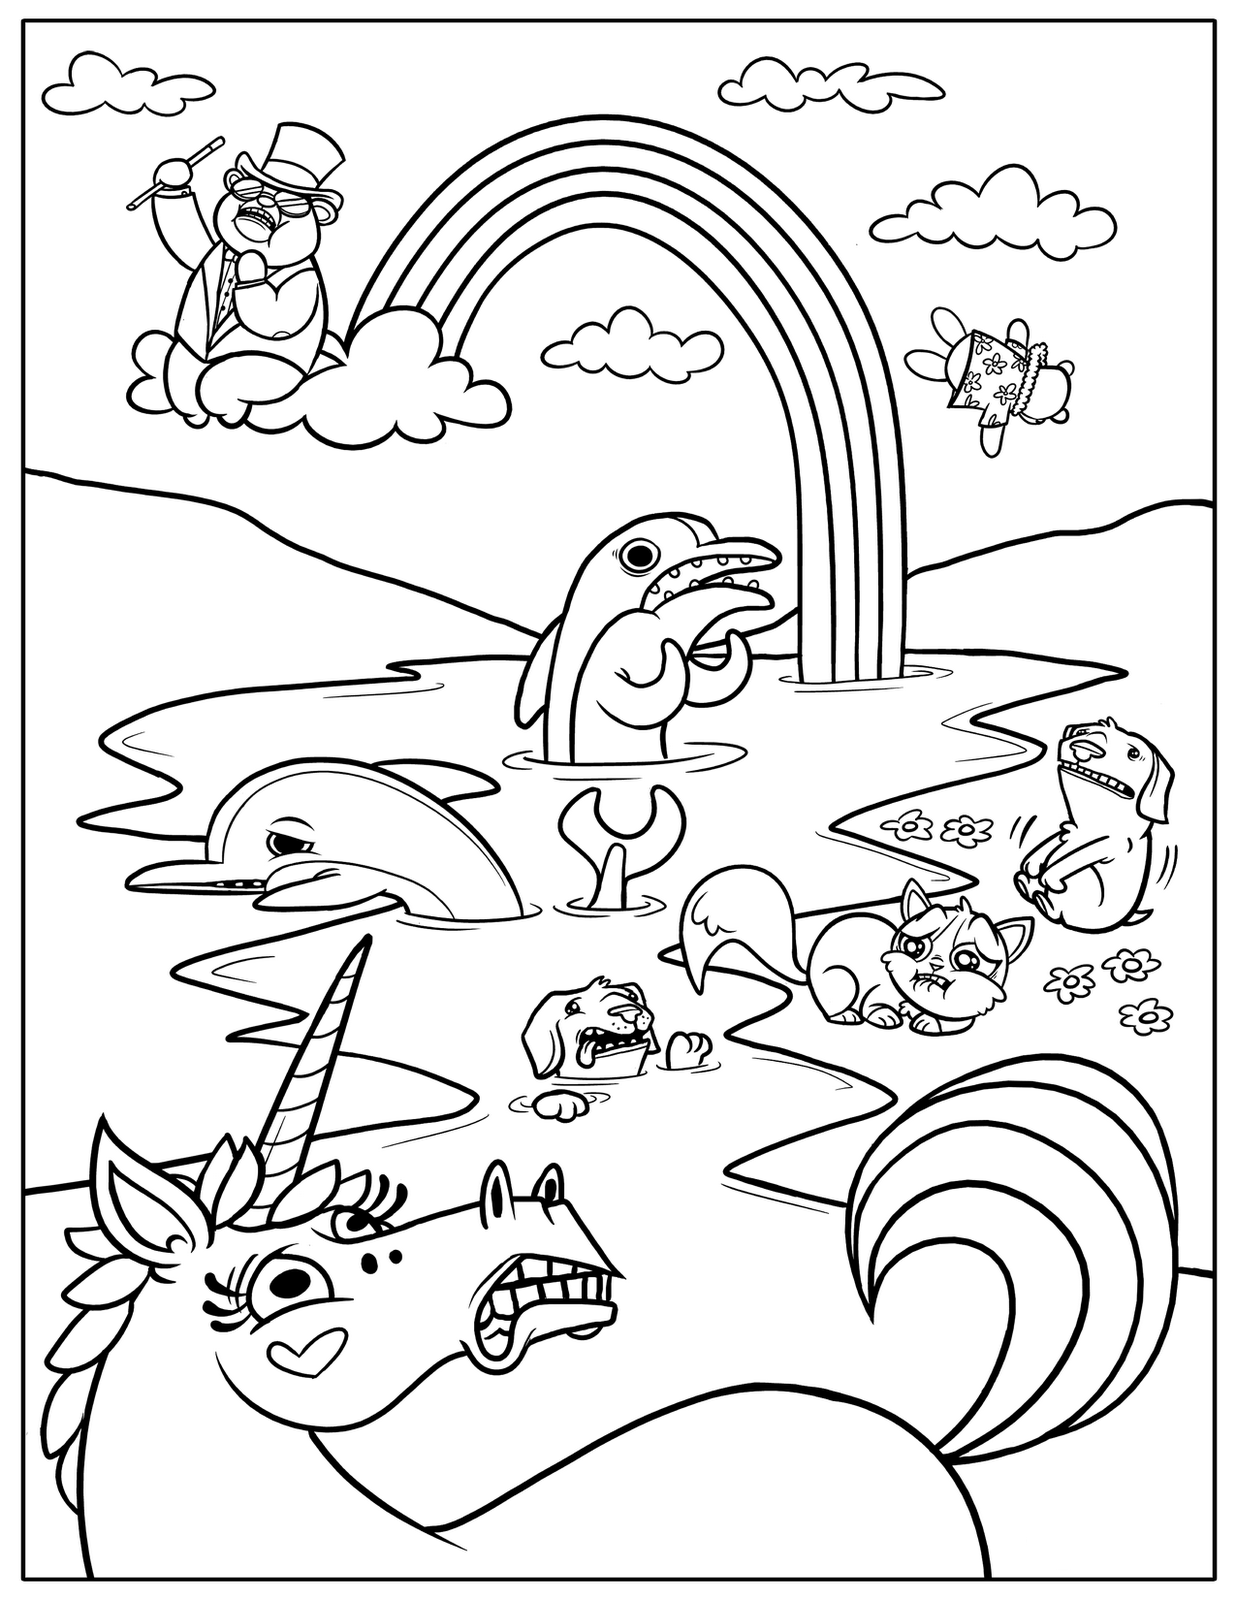 free-preschool-coloring-pages-of-rainbows-download-free-preschool